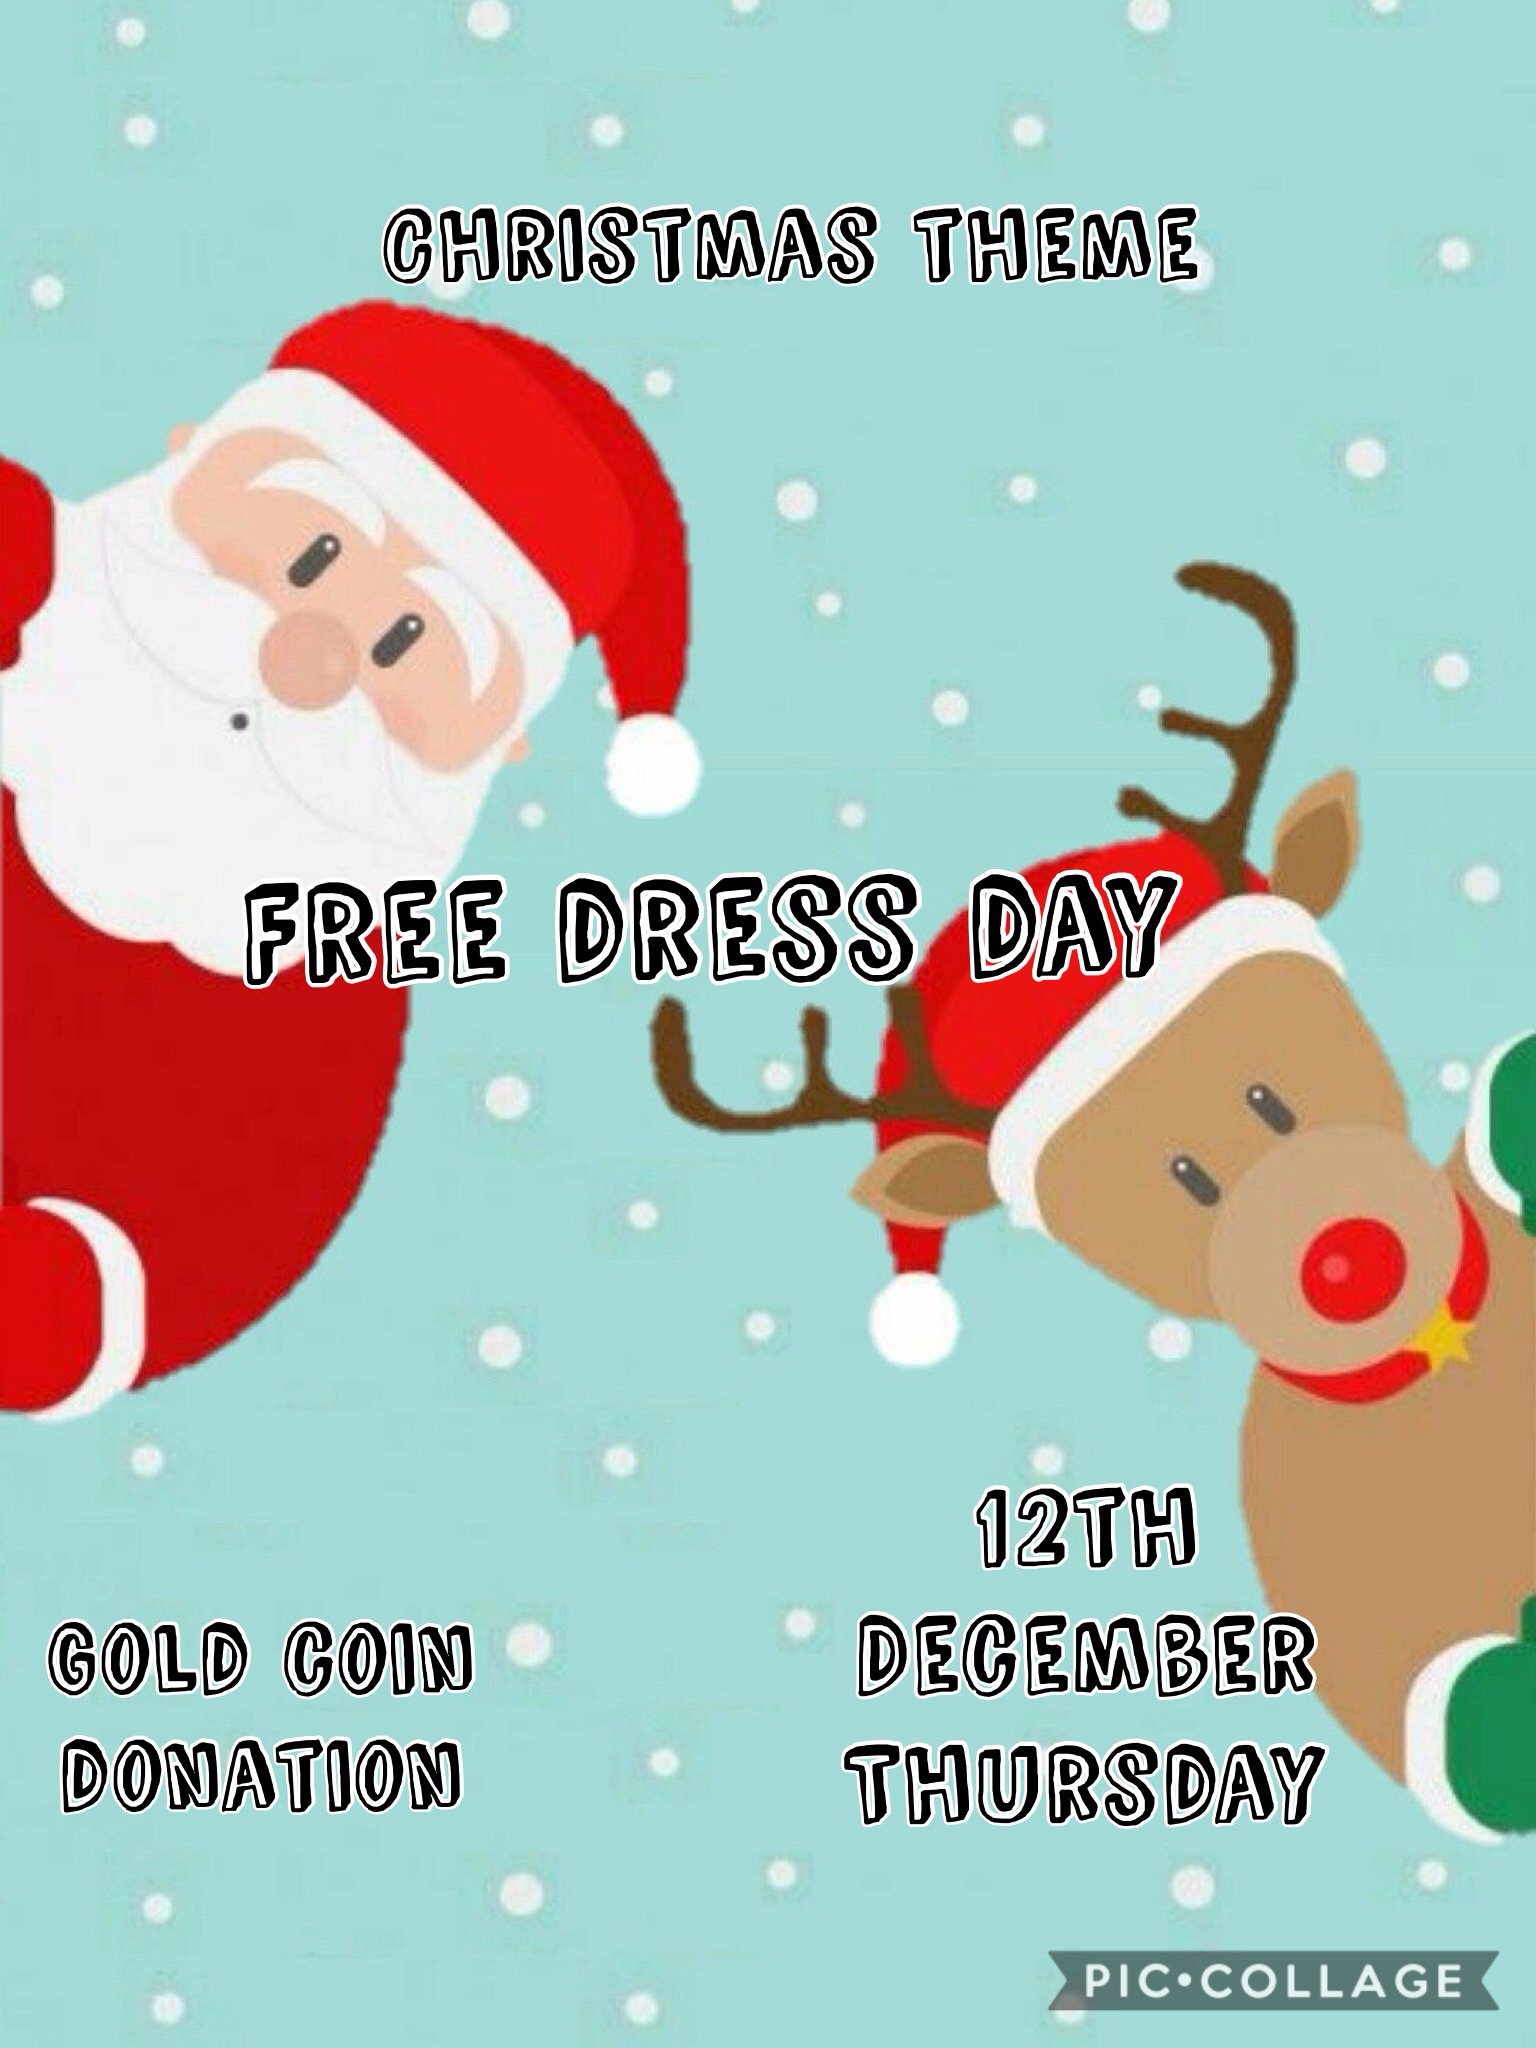 Christmas Themed Free Dress Day - Thursday, 12th December